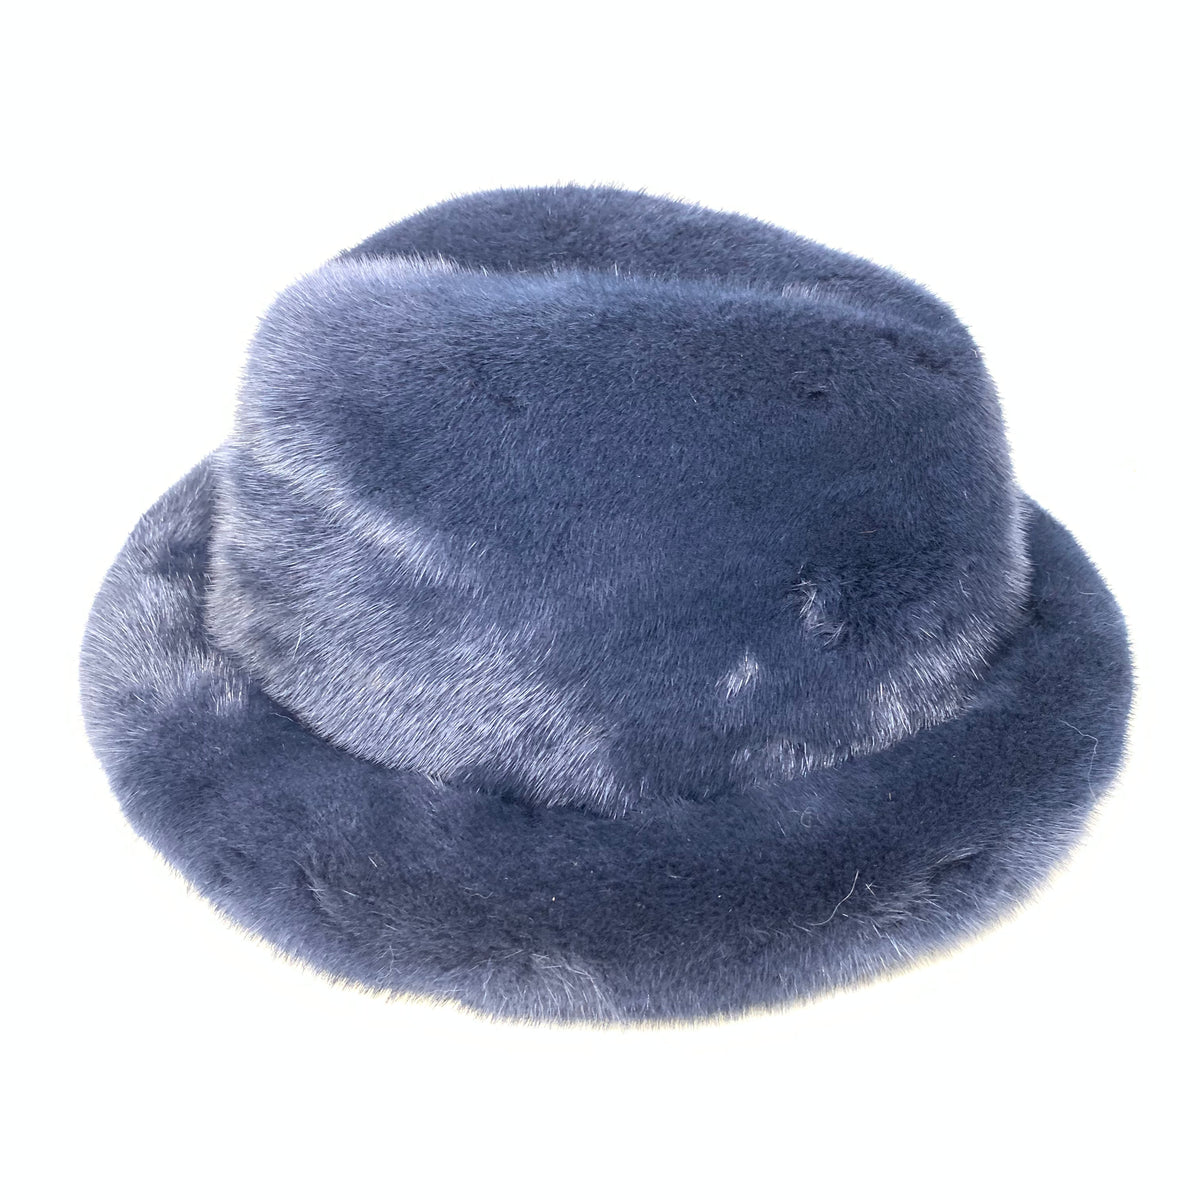 Kashani Men's Navy Full Mink Fur Top Hat - Dudes Boutique